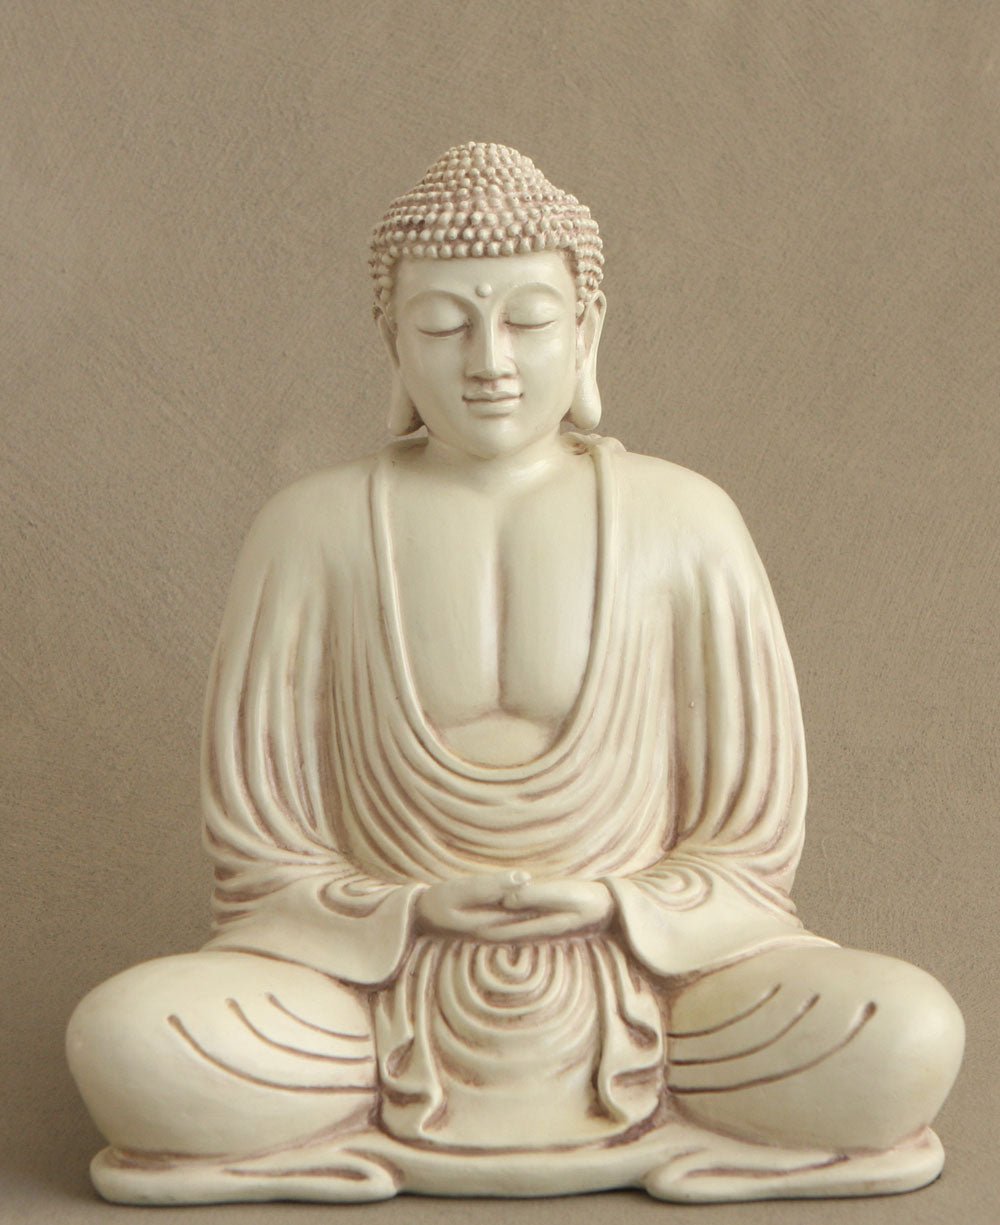 Minimalist Indoor-Outdoor Buddha Statue, 8.5 Inches - Sculptures & Statues